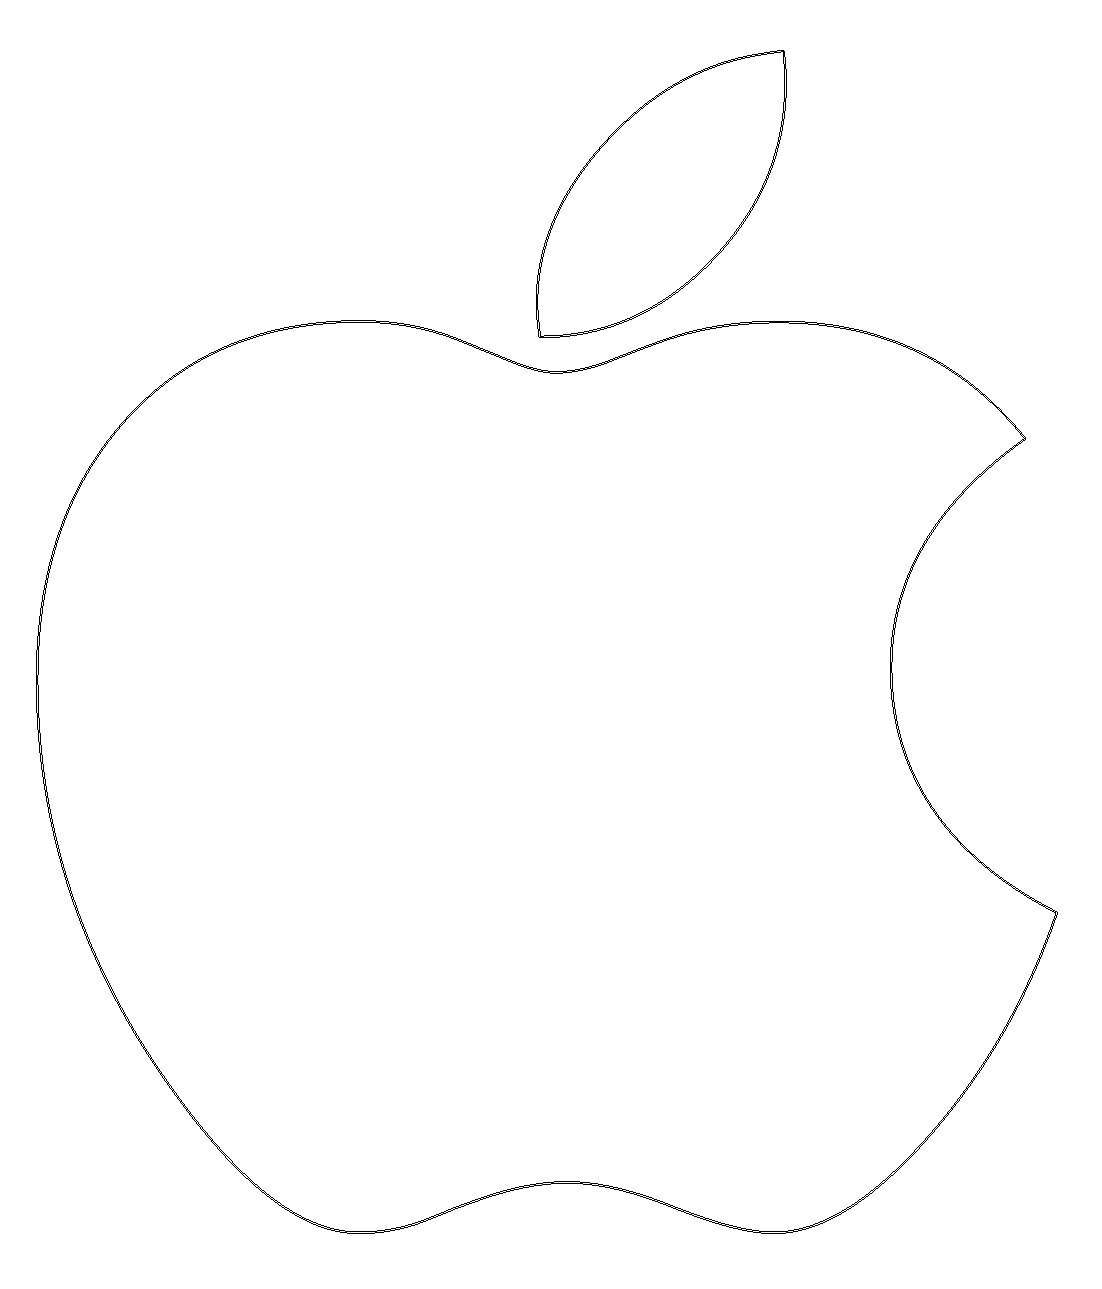 Logo Apple Png - ClipArt Best